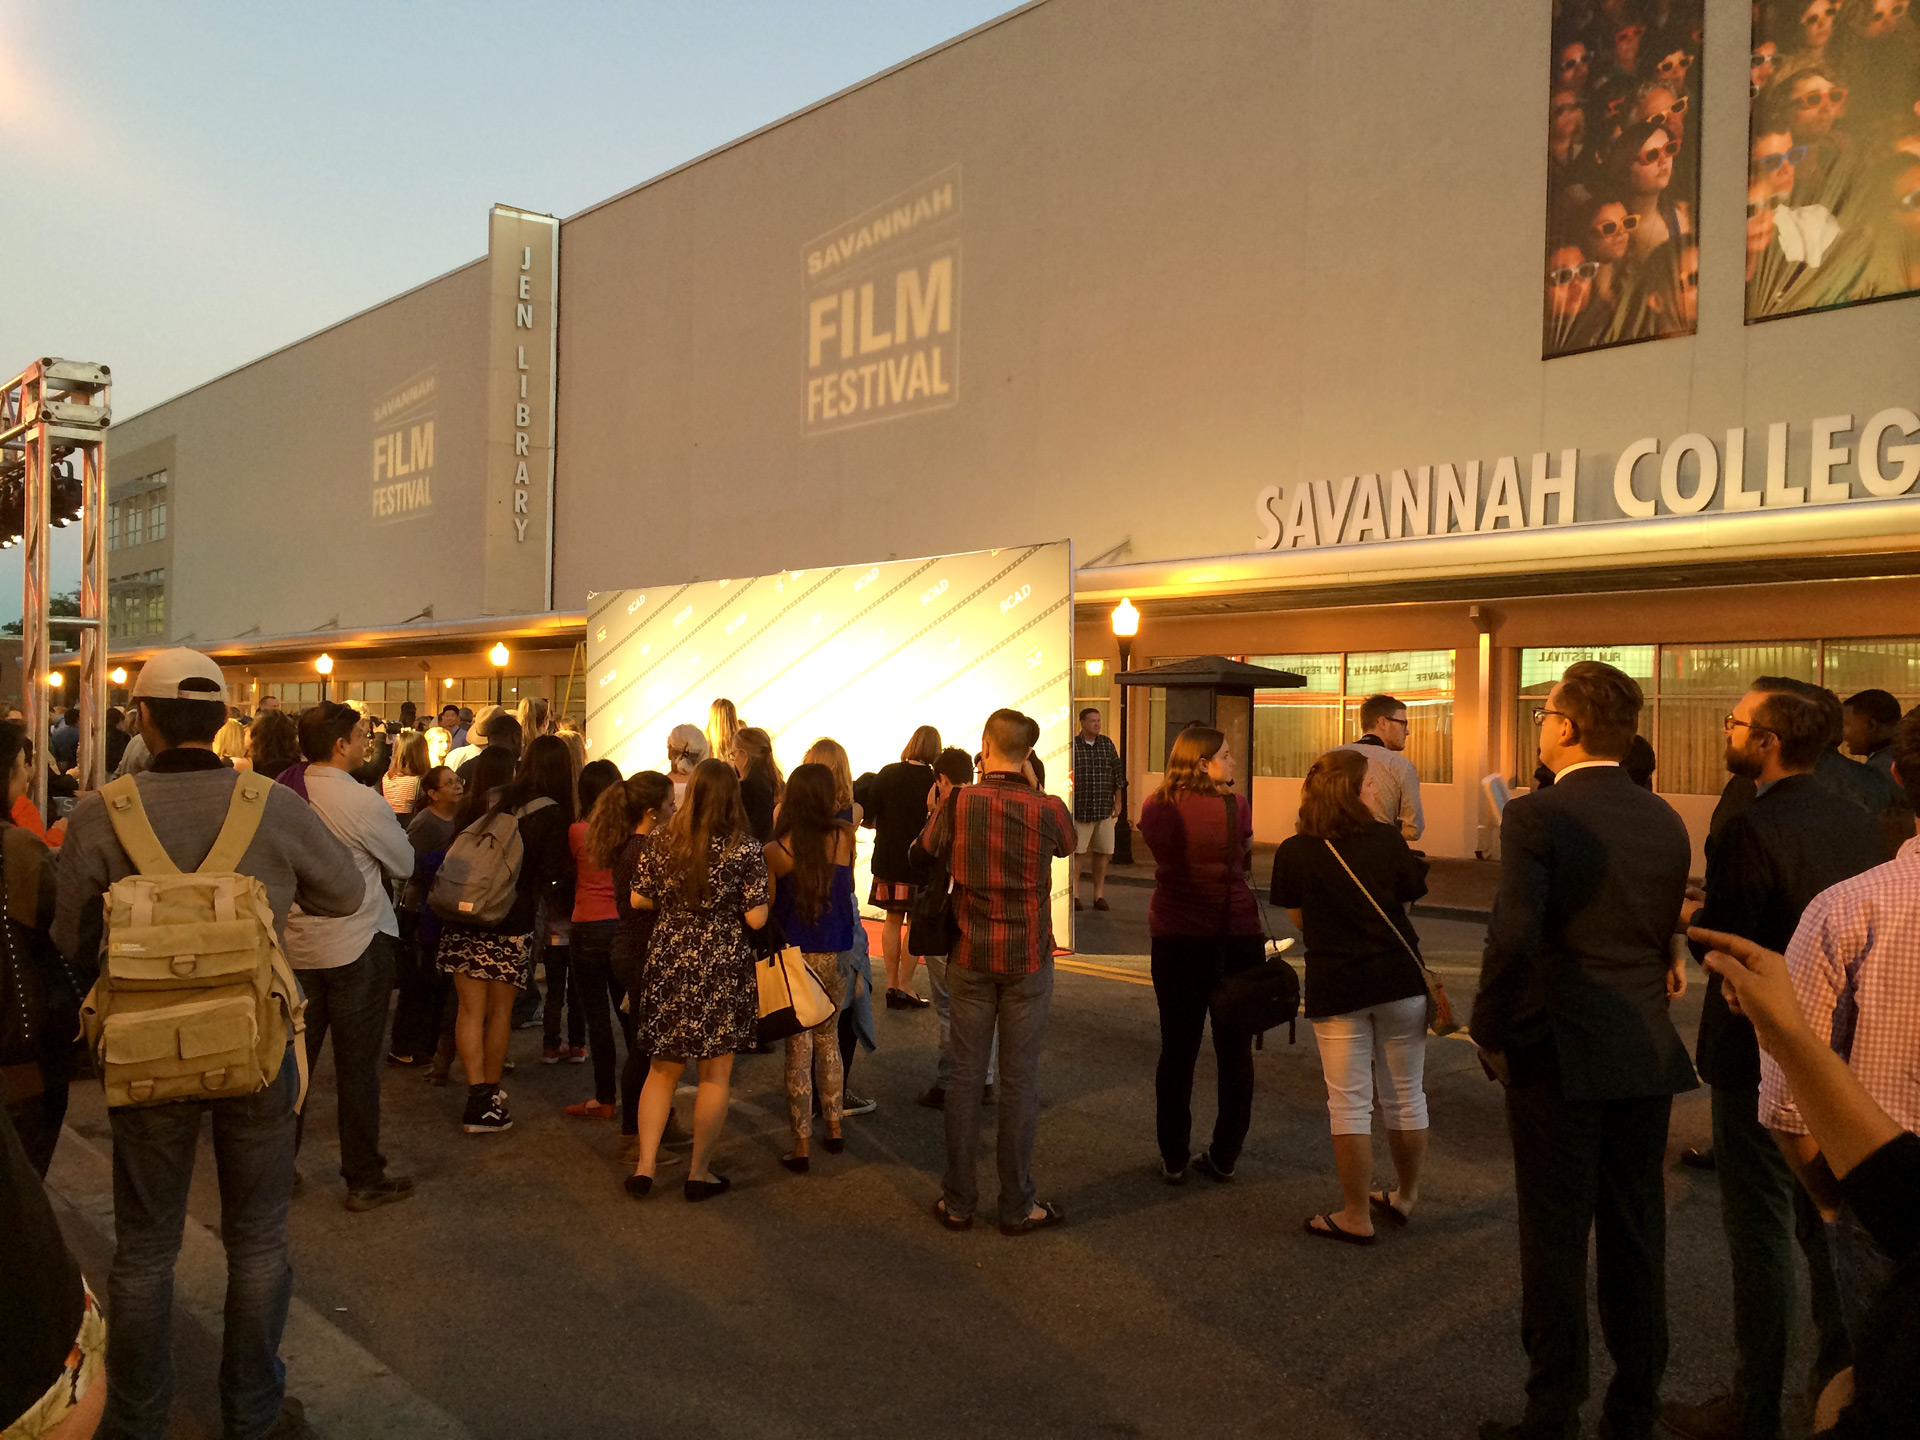 Savannah Film Festival 5 benefits to future filmmakers SCAD.edu